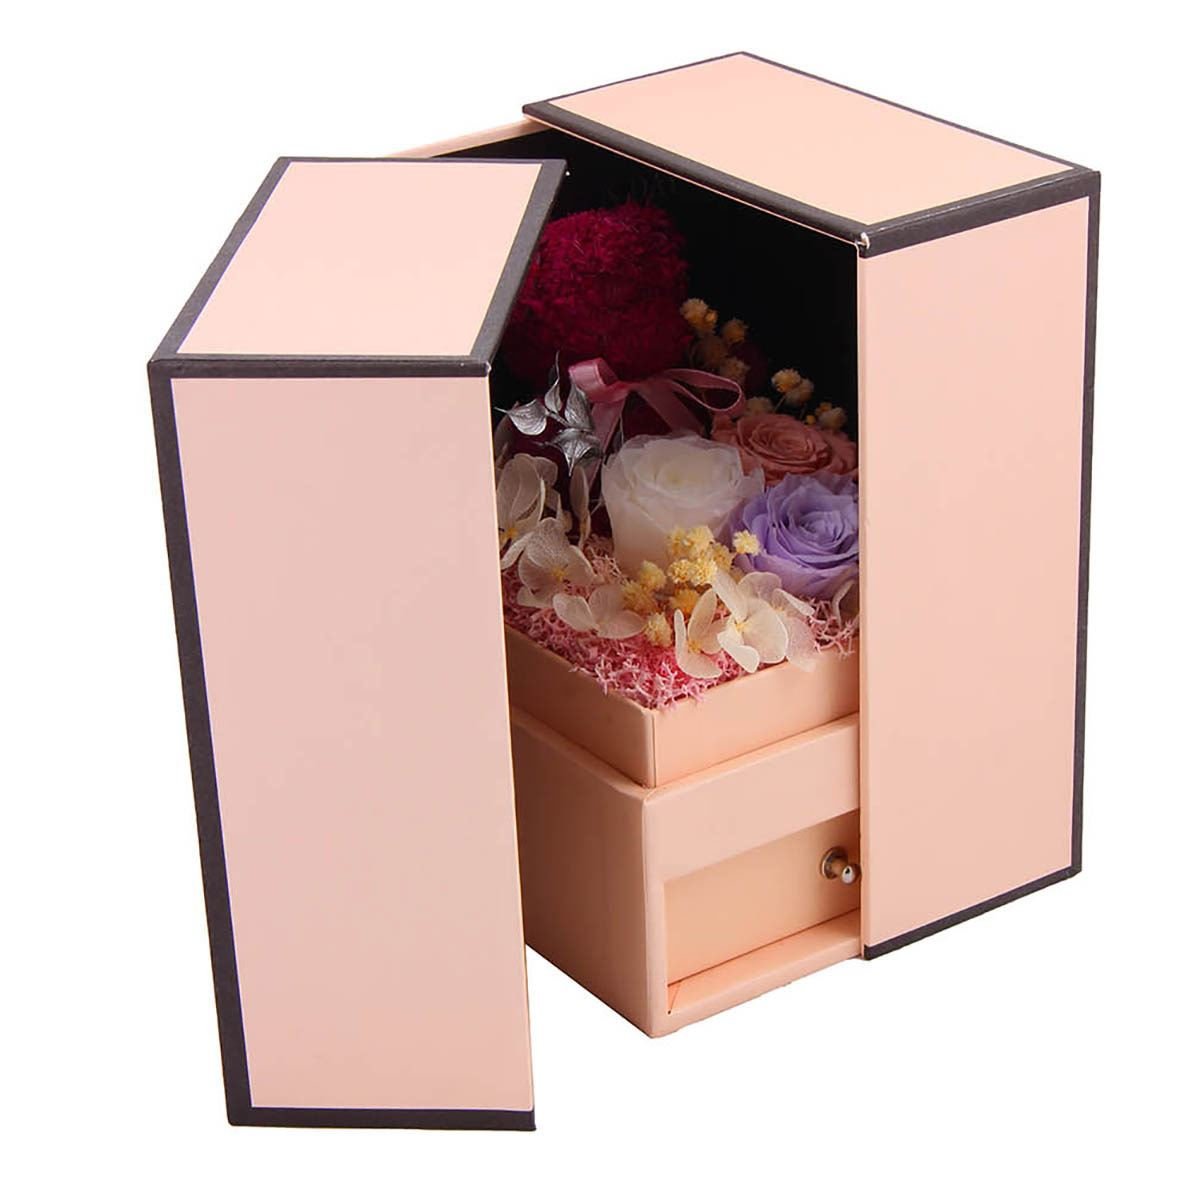 Home Nature joyero con caja de regalo y bouquet color rosa 13*13*17 cm